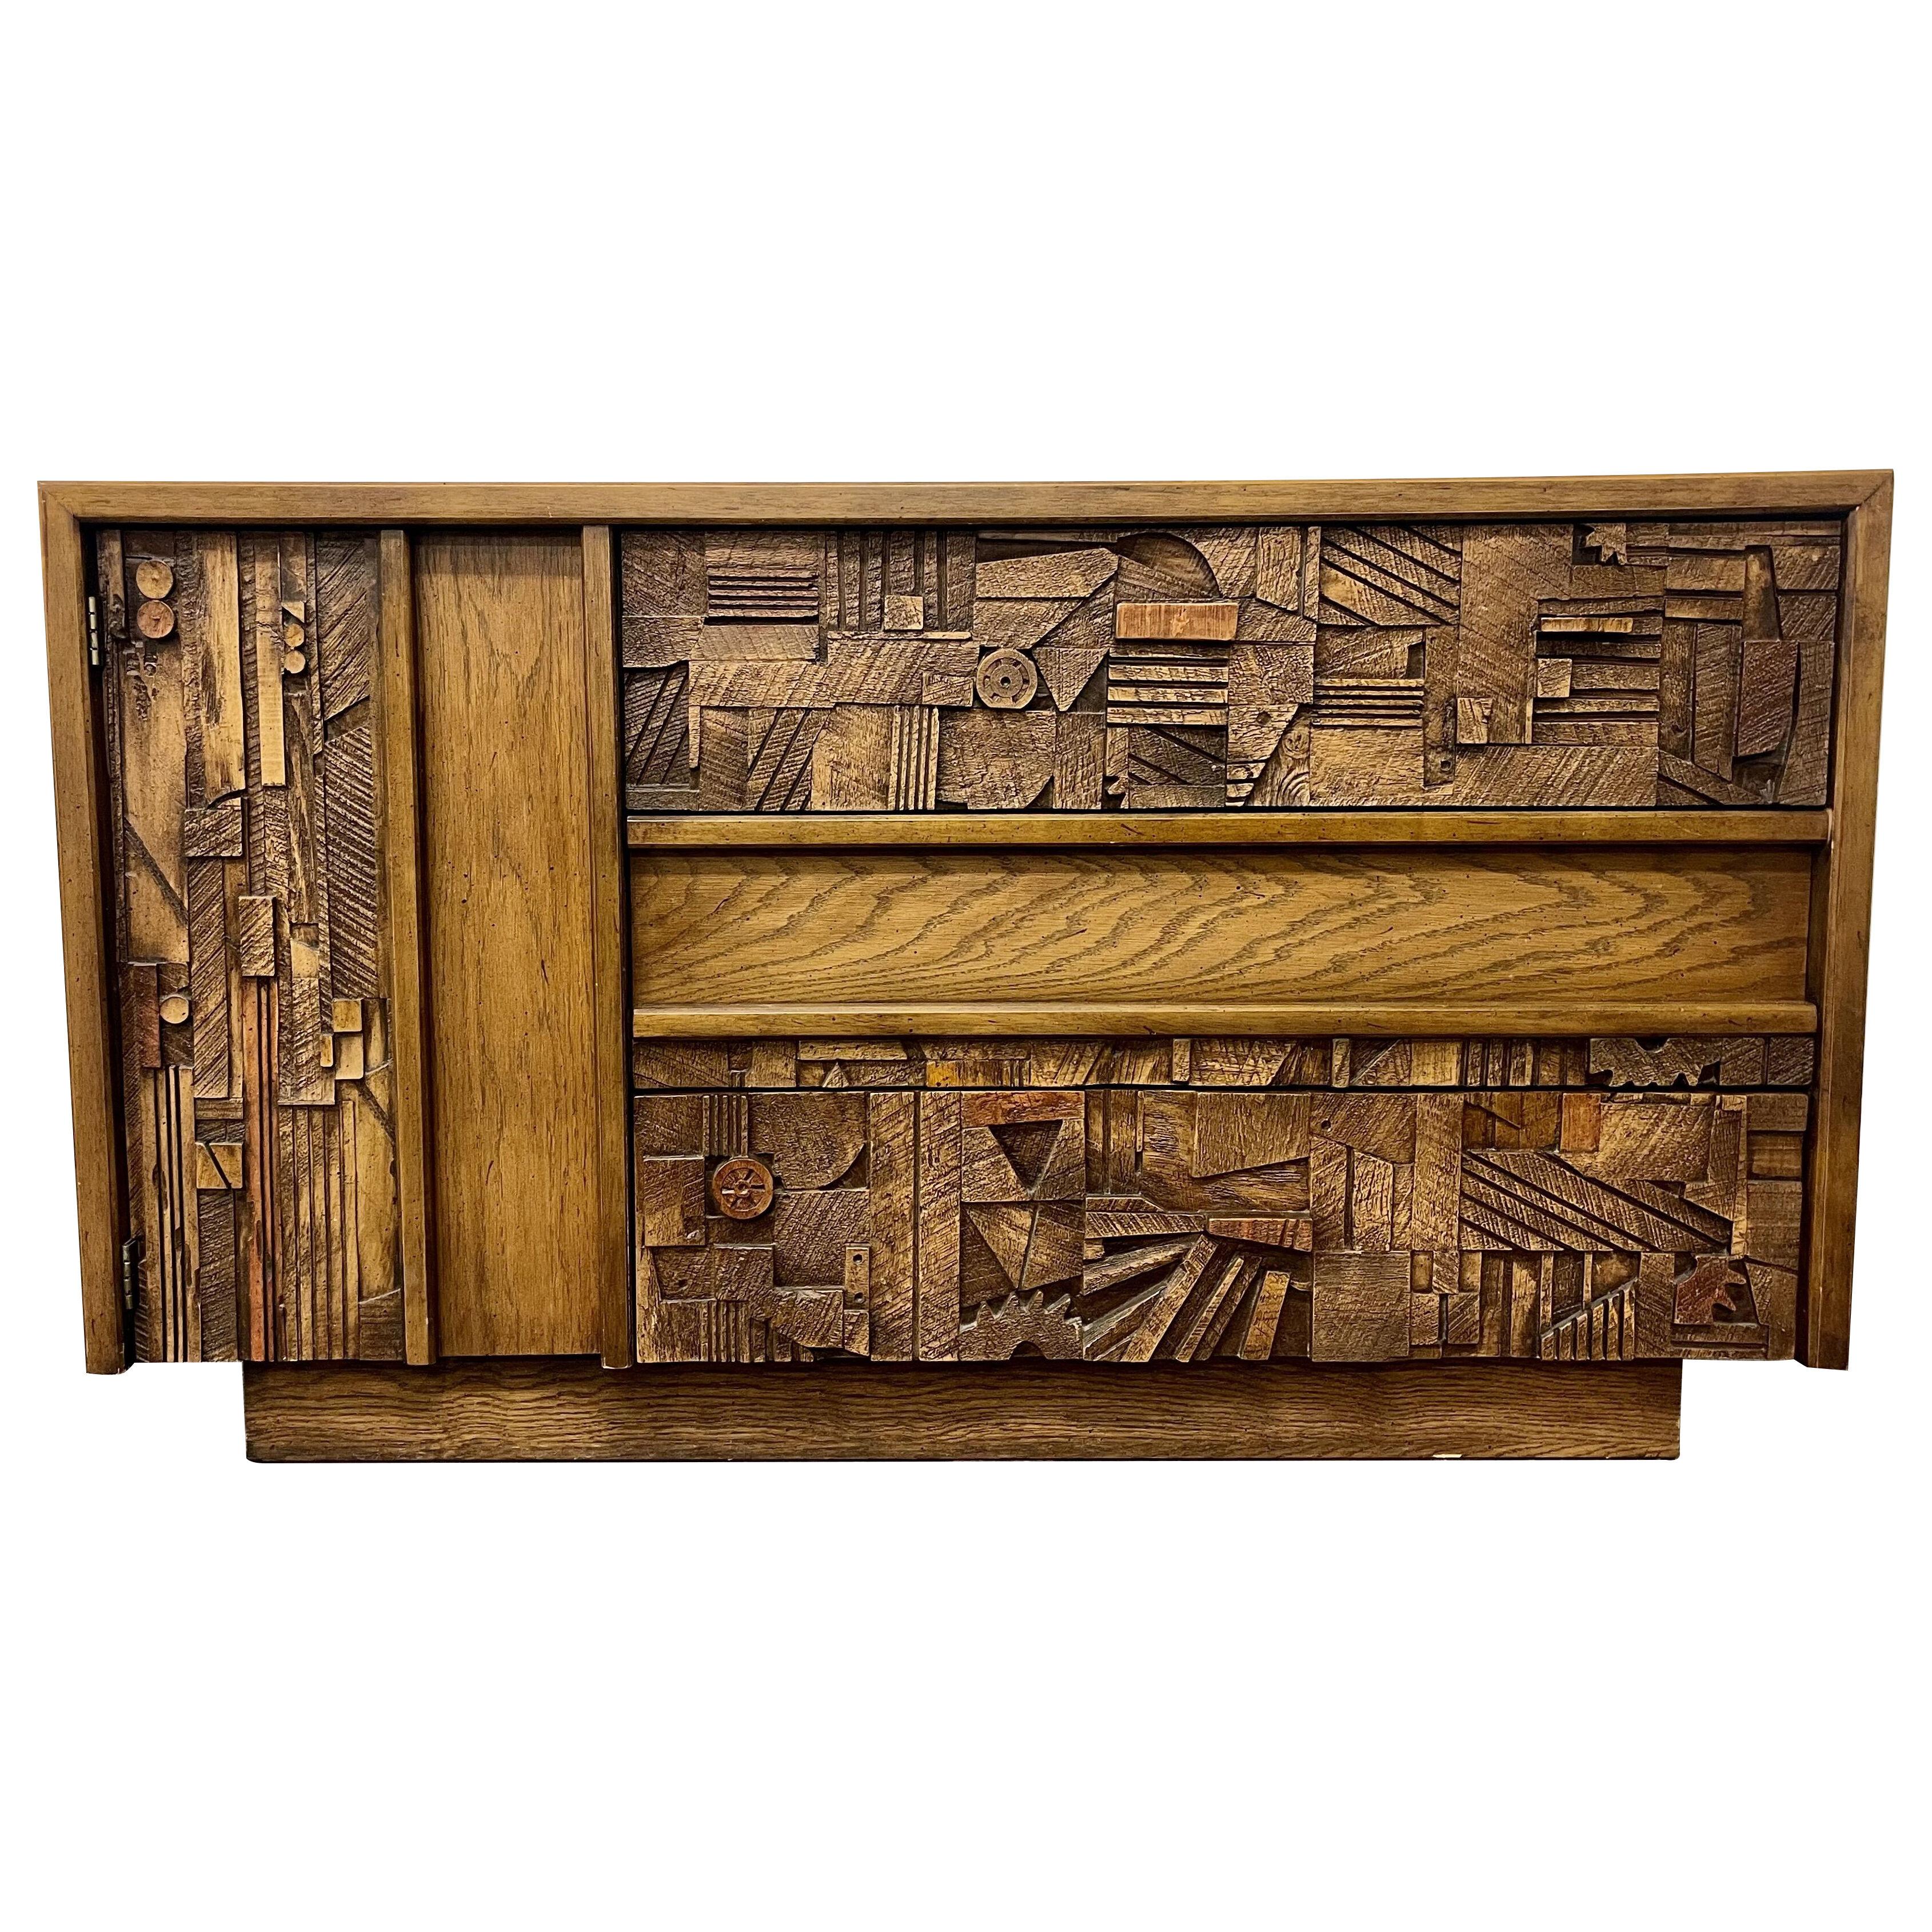 Brutalist Dresser, Chest or Commode by Lane, Mid Century Modern